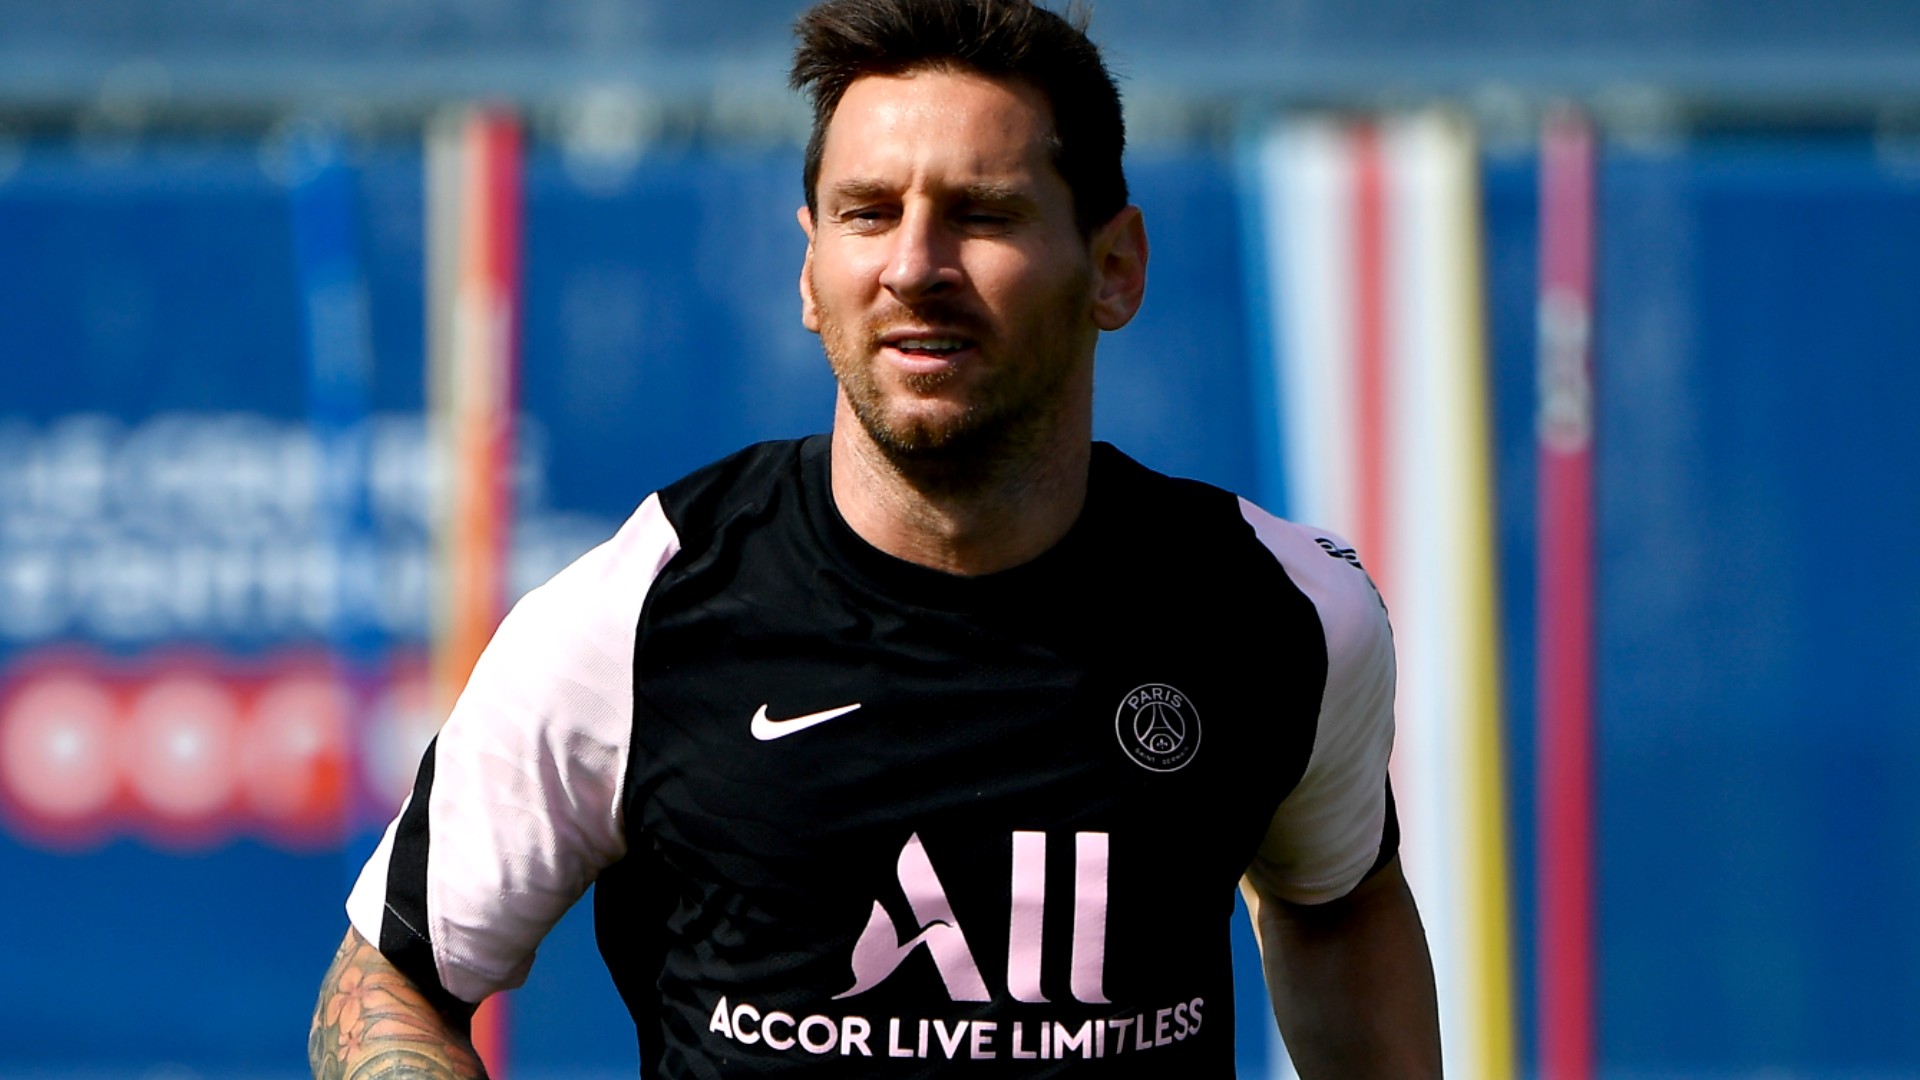 BREST vs PSG Live: Lionel Messi left out of PSG's today's game vs Brest